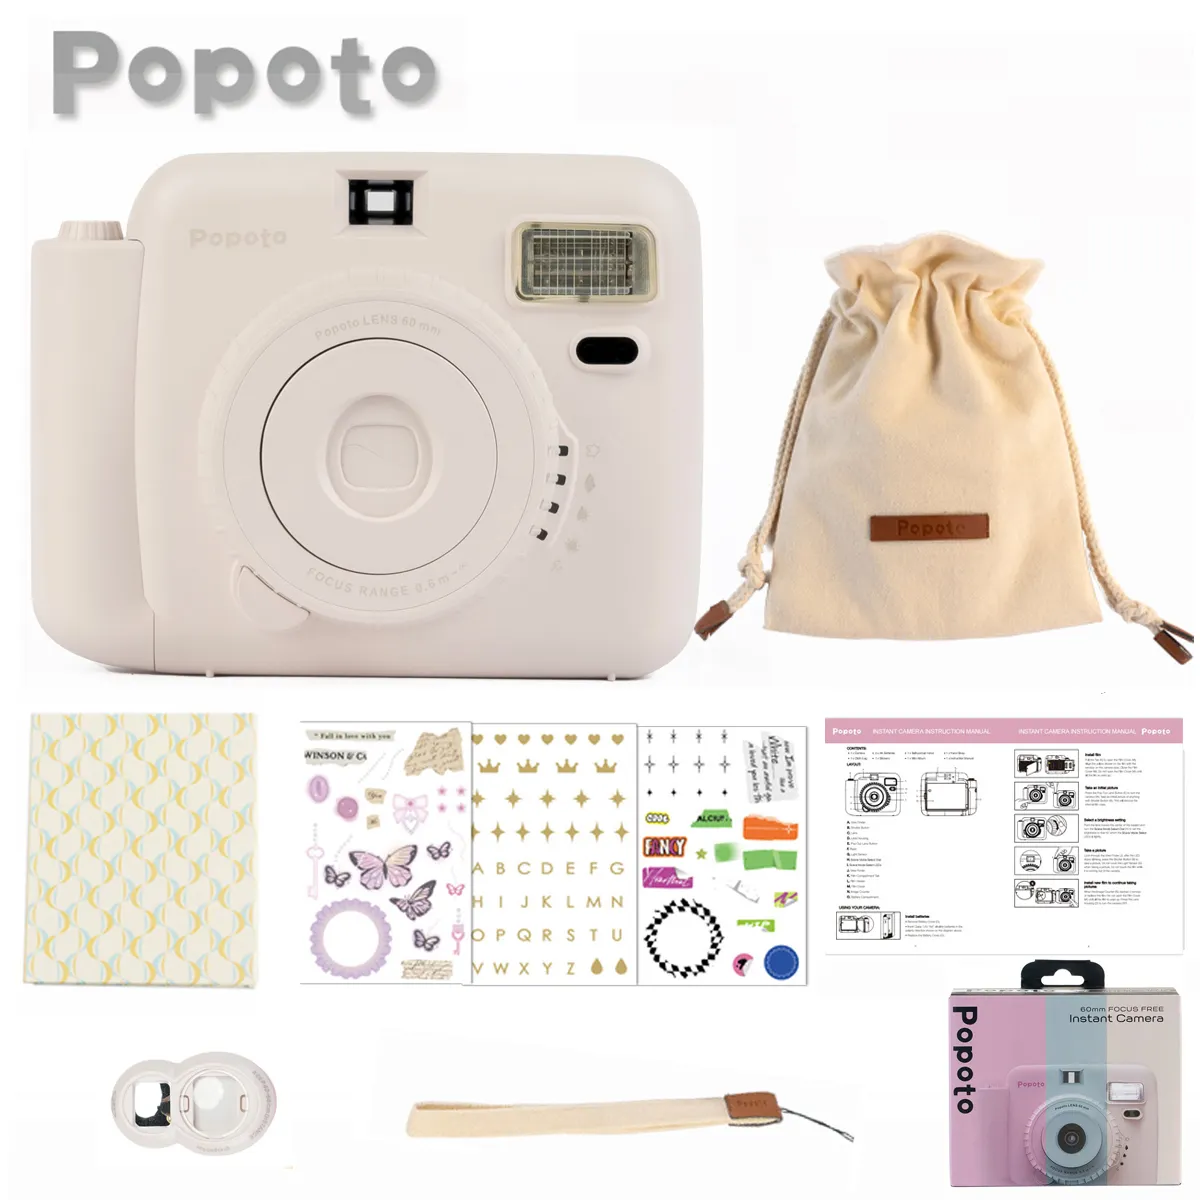 Popoto appareil photo instantané cadeau pour Fujifilm Instax Film Polaroid appareil photo joyeux noël cadeau fête en plein air